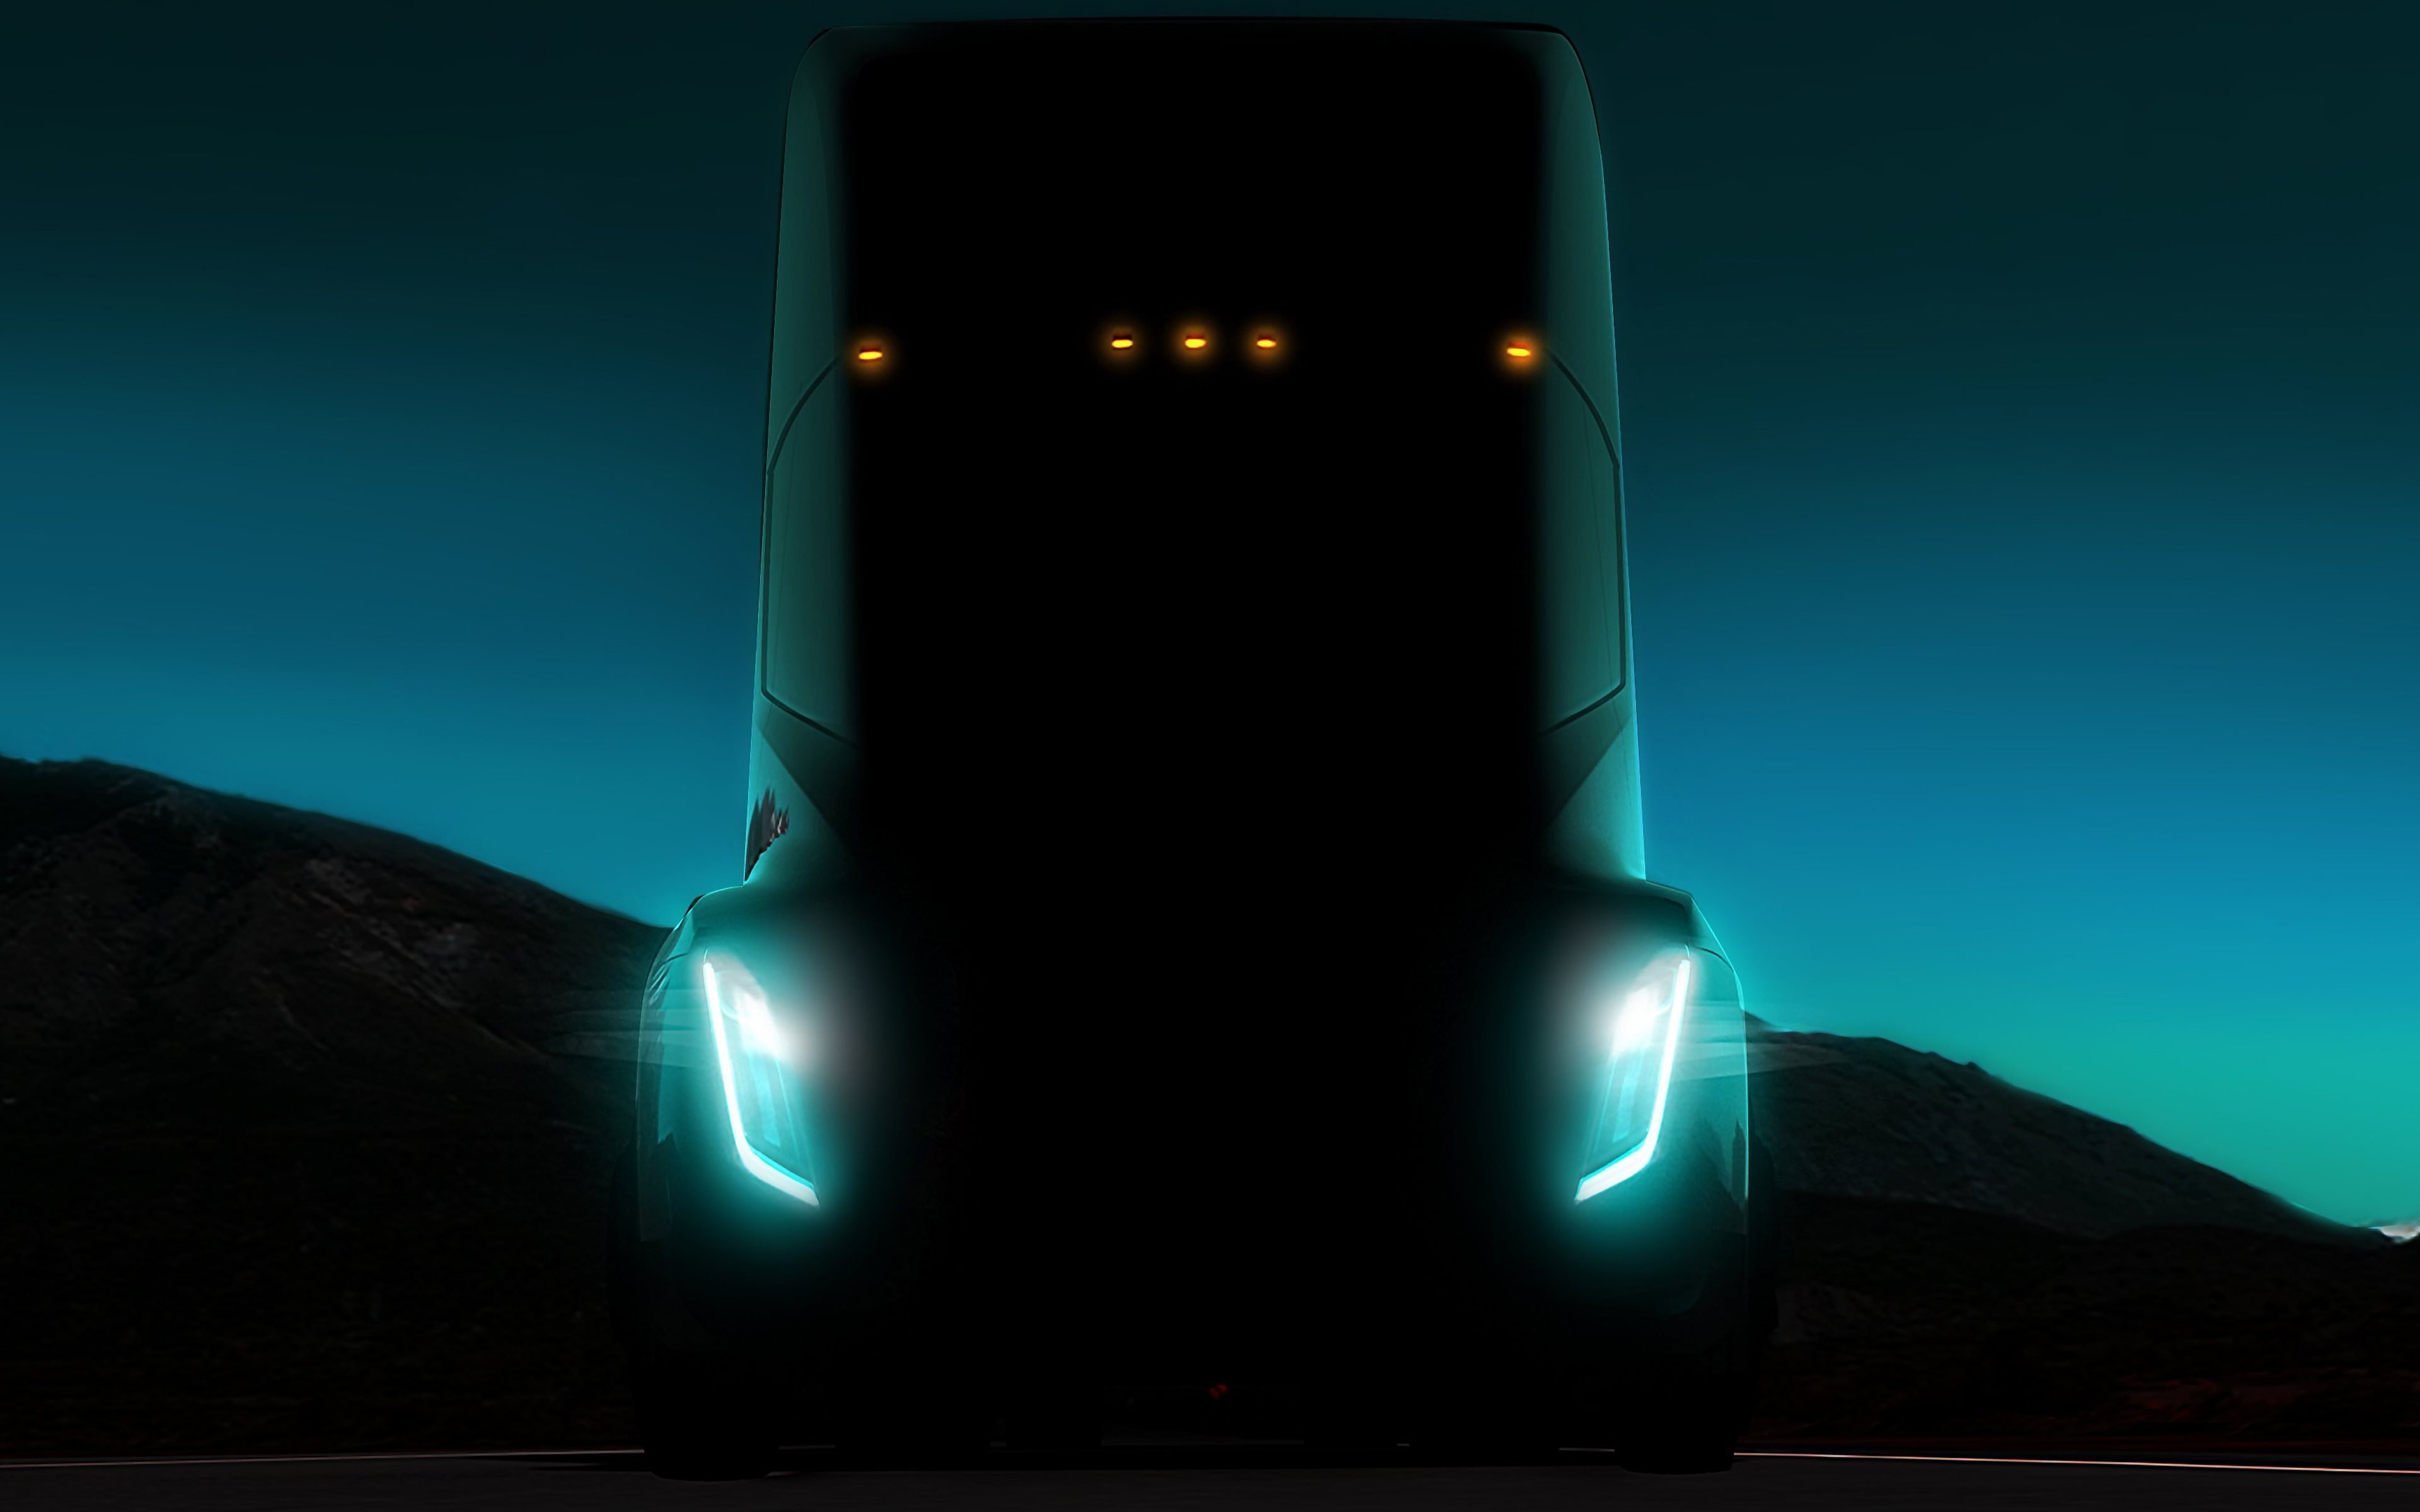 Download wallpapers 4k Tesla Semi Truck headlights 2018 truck